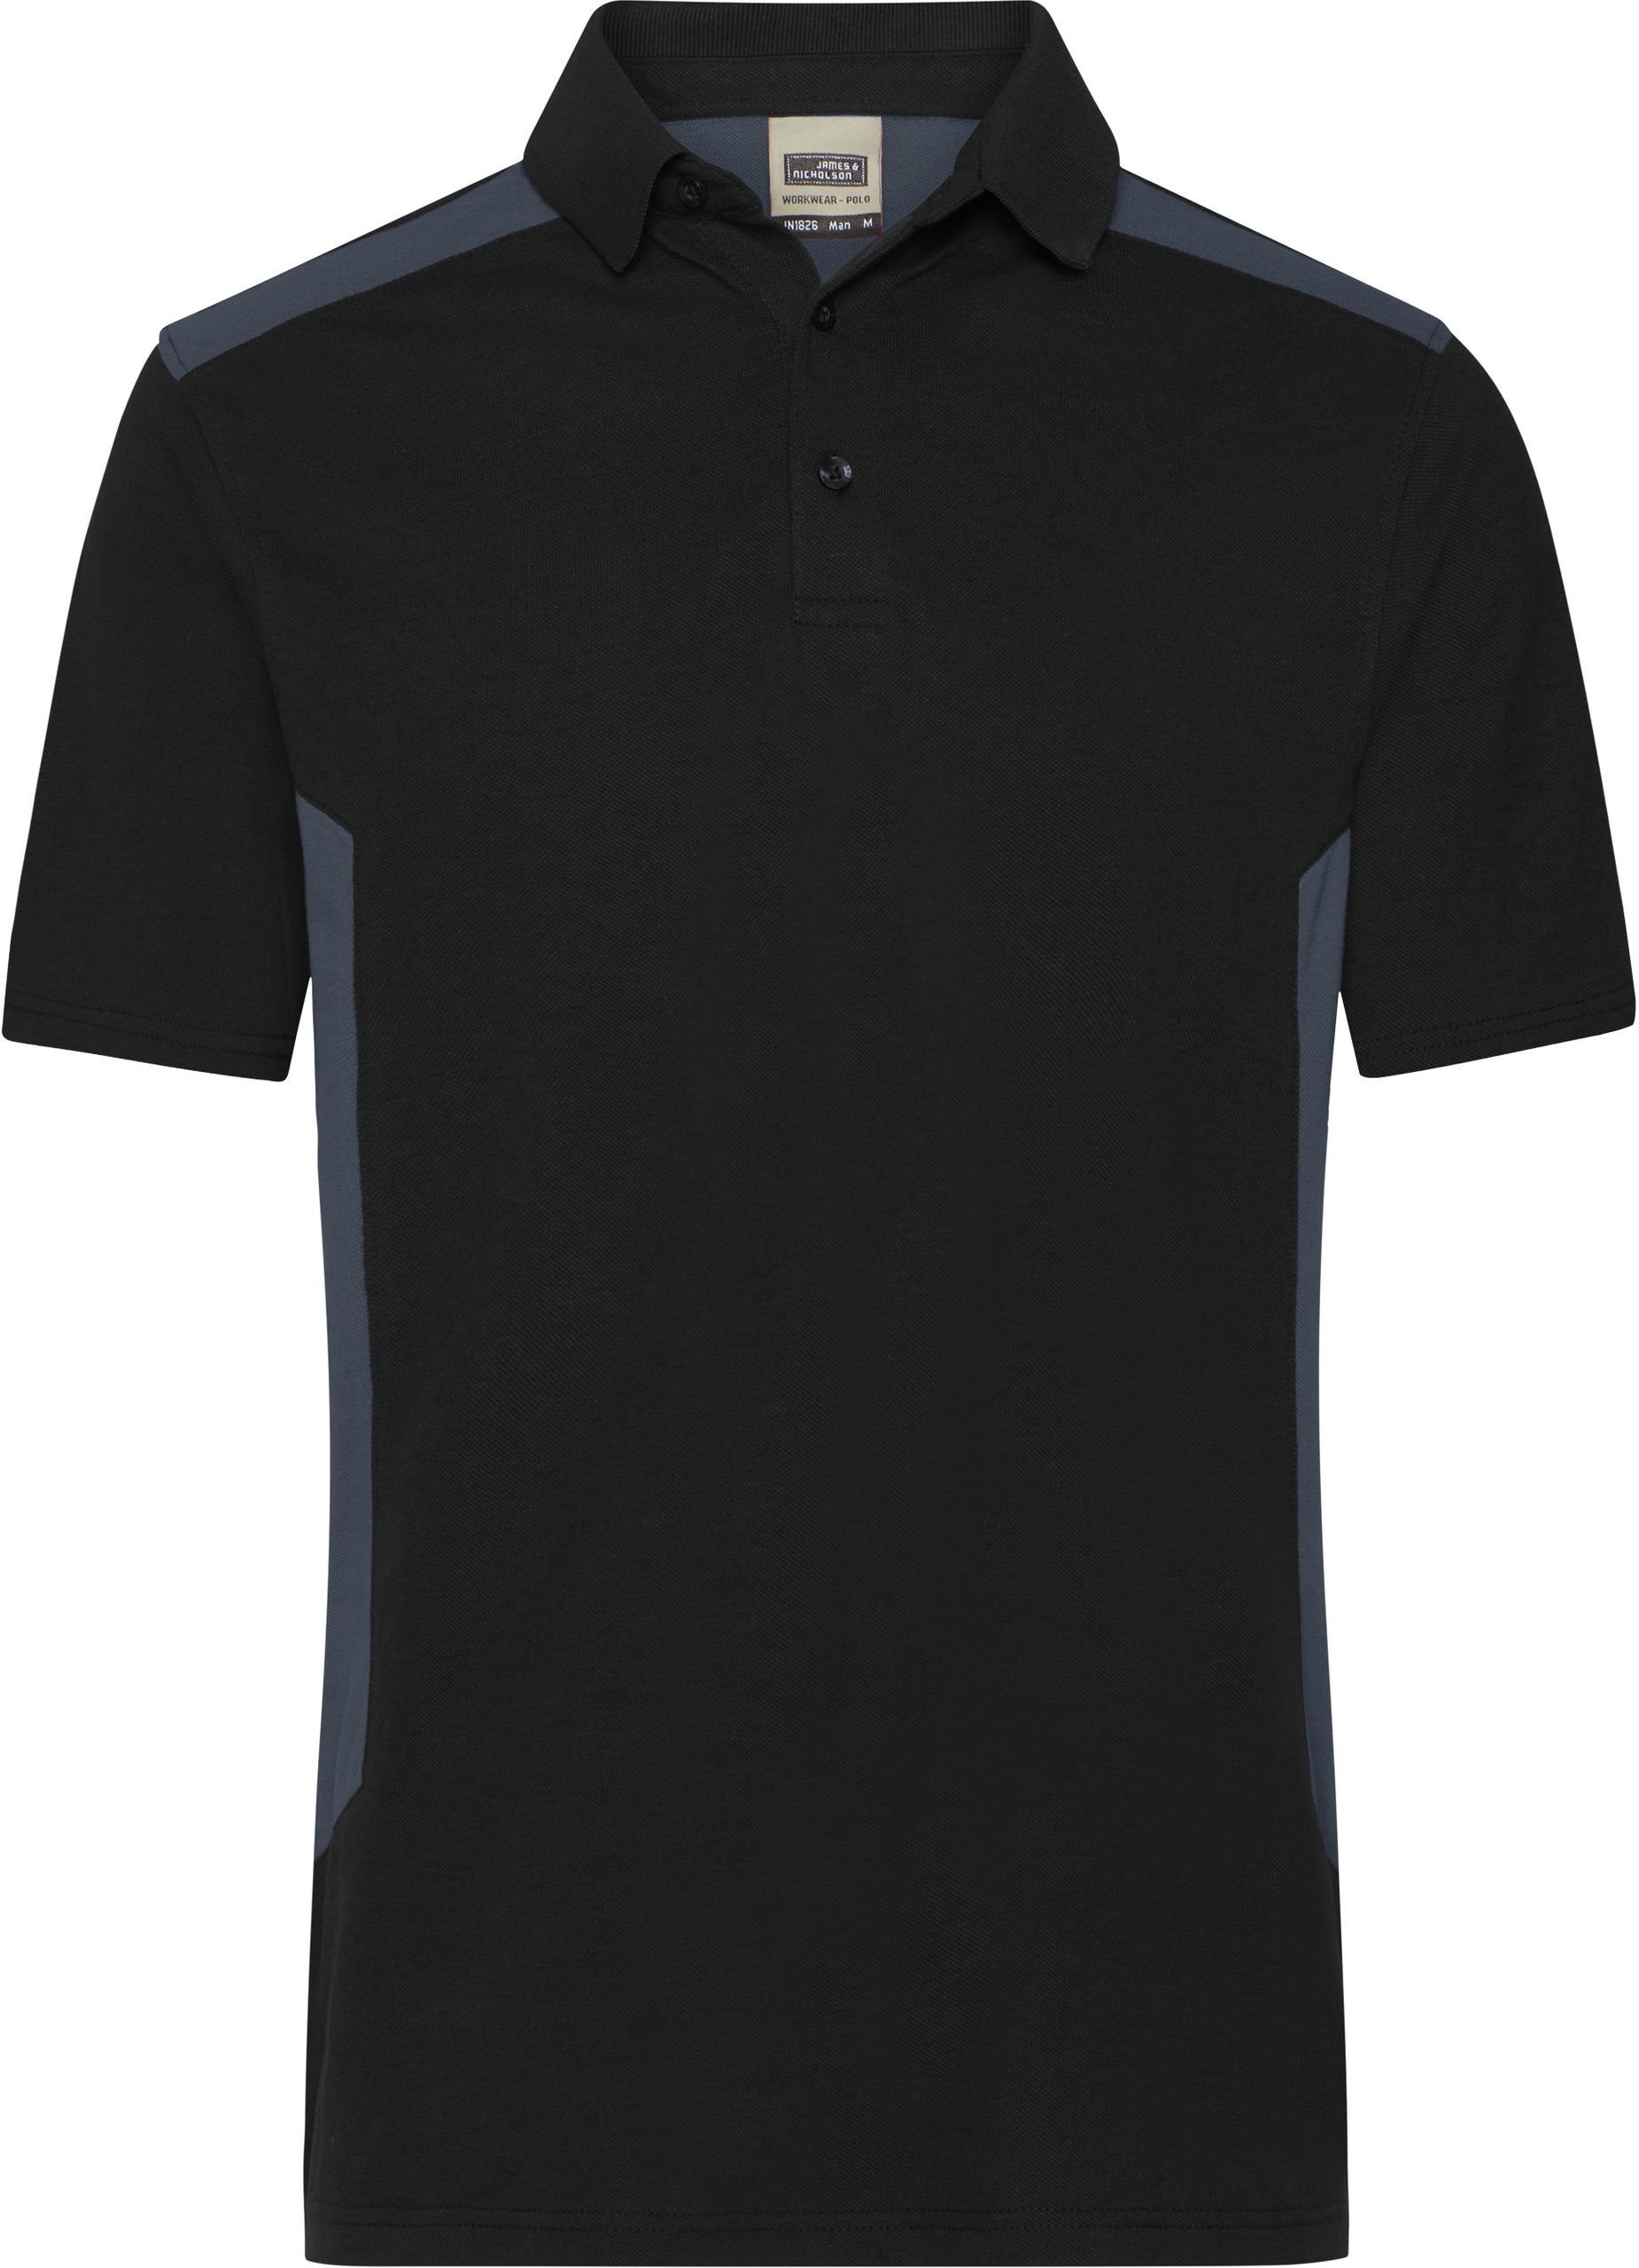 James & Nicholson Poloshirt Herren Workwear Polo - Strong black/carbon